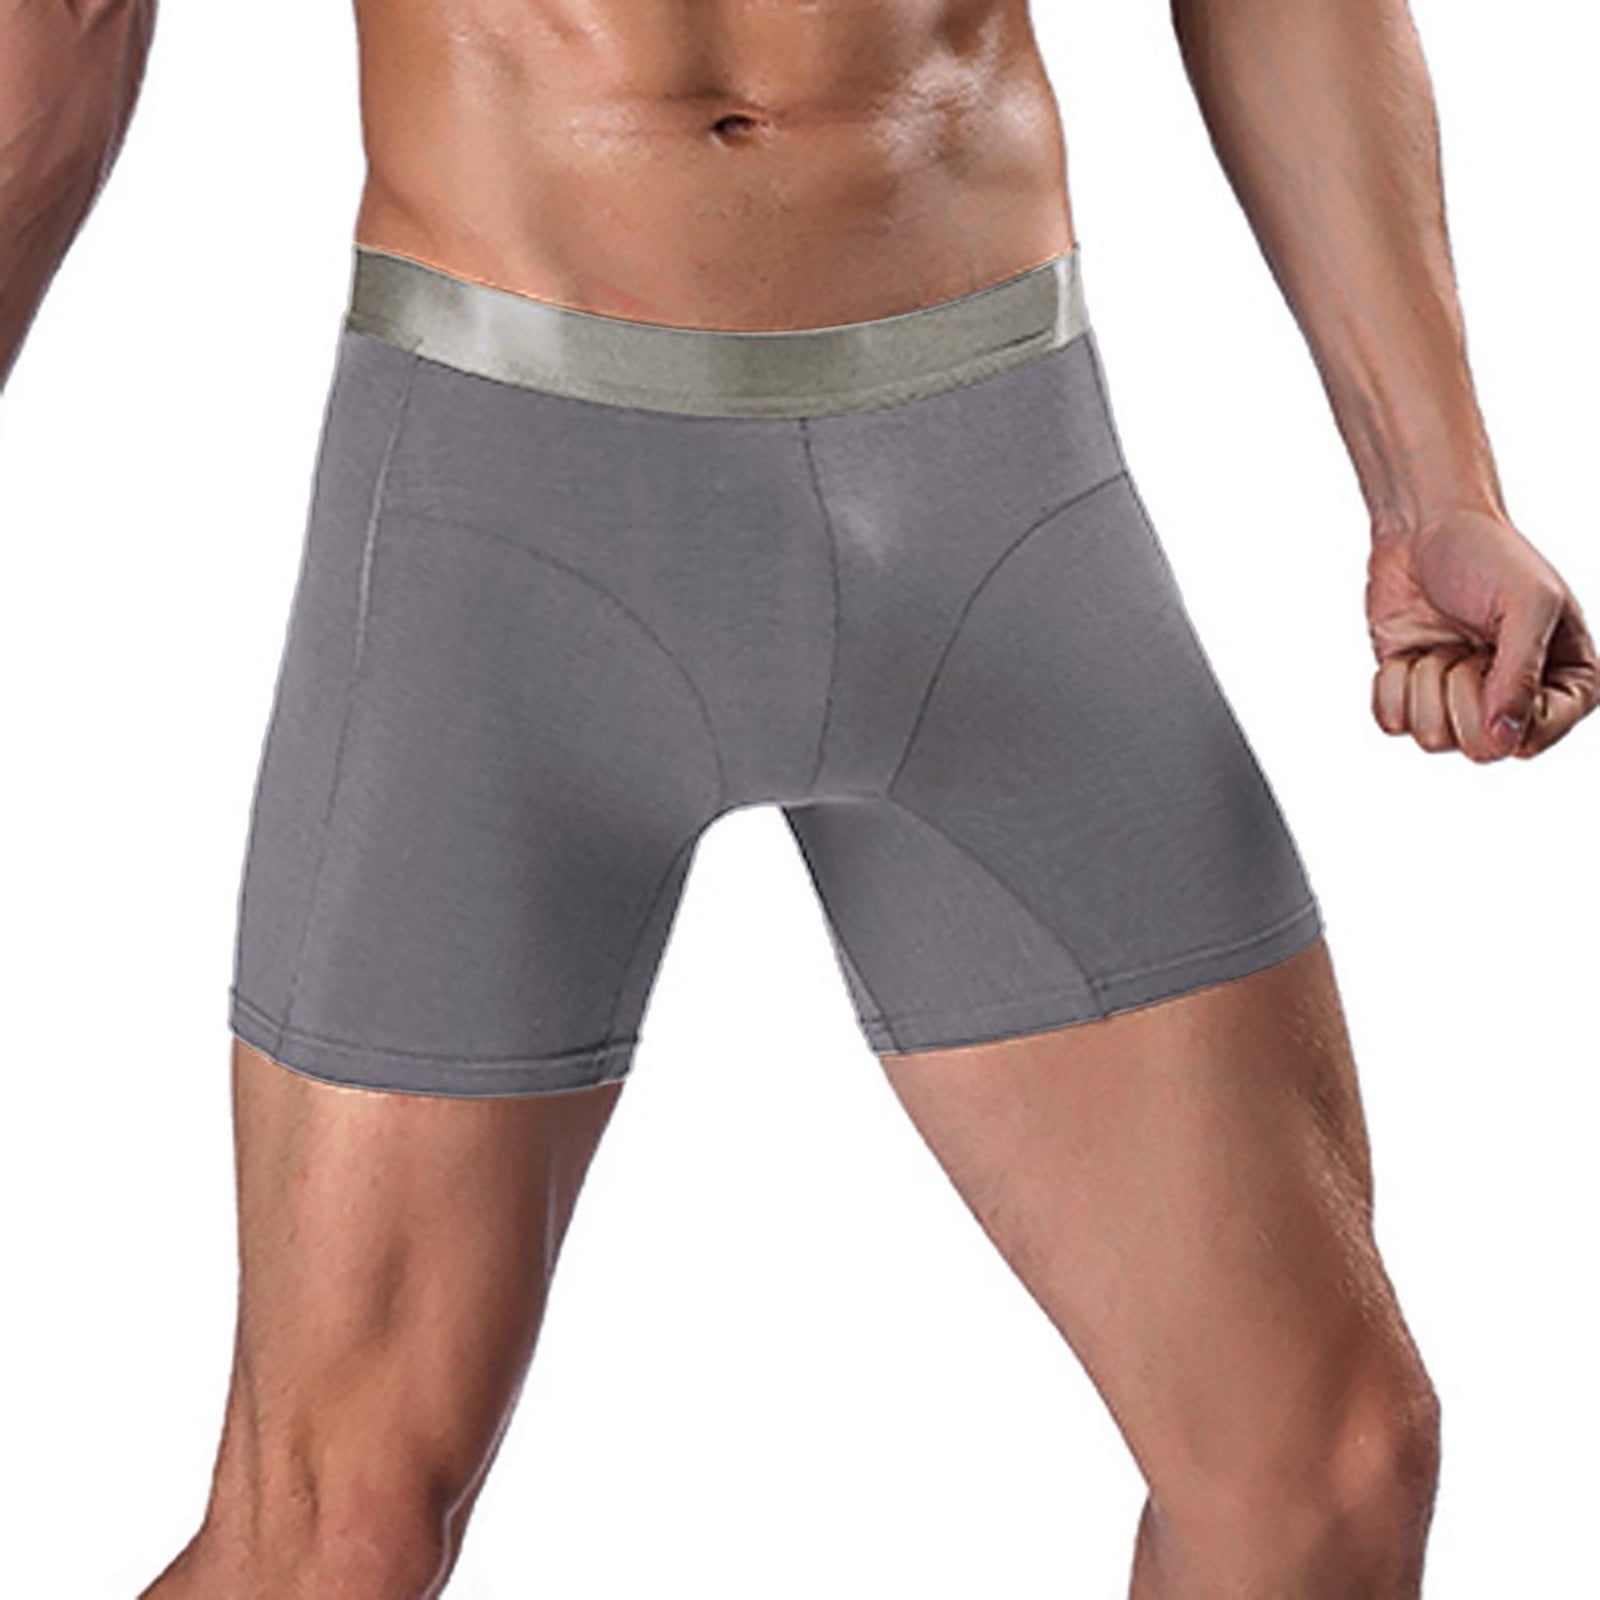 OVTICZA Boxer Briefs for Men Sexy Long Leg Anti Chafing Underwear Gray 2XL